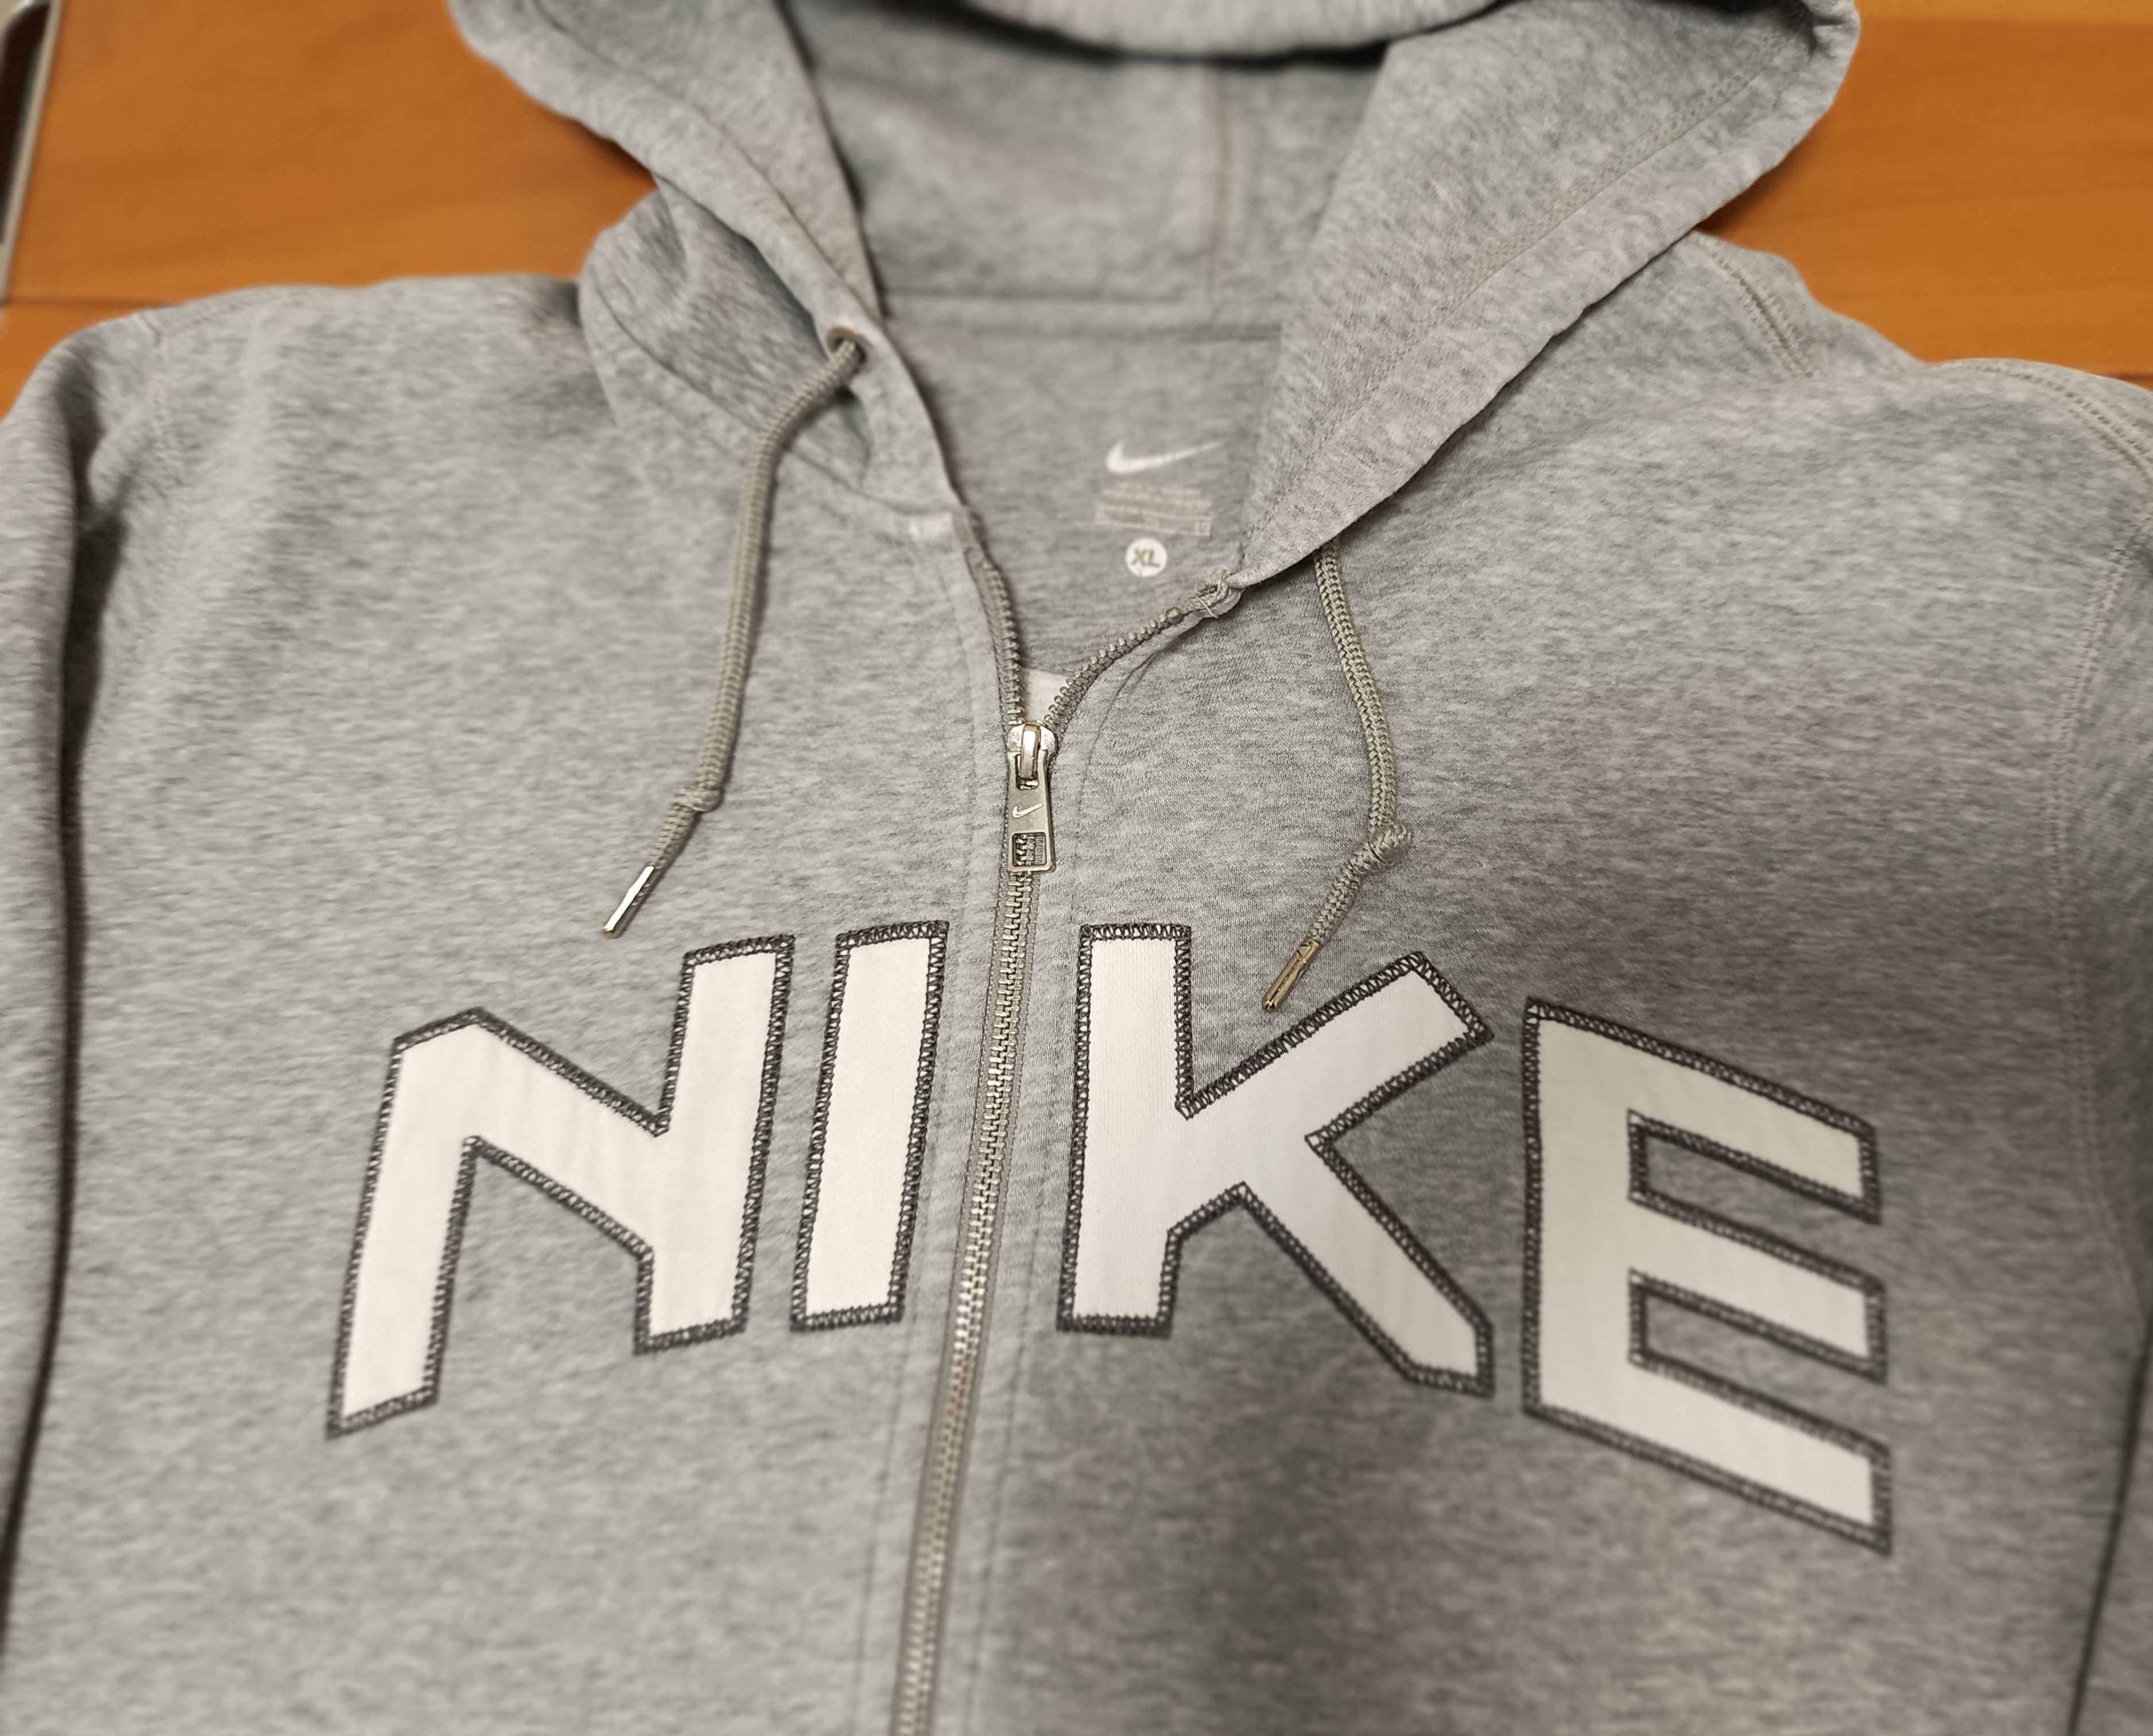 Nike-Много Запазен